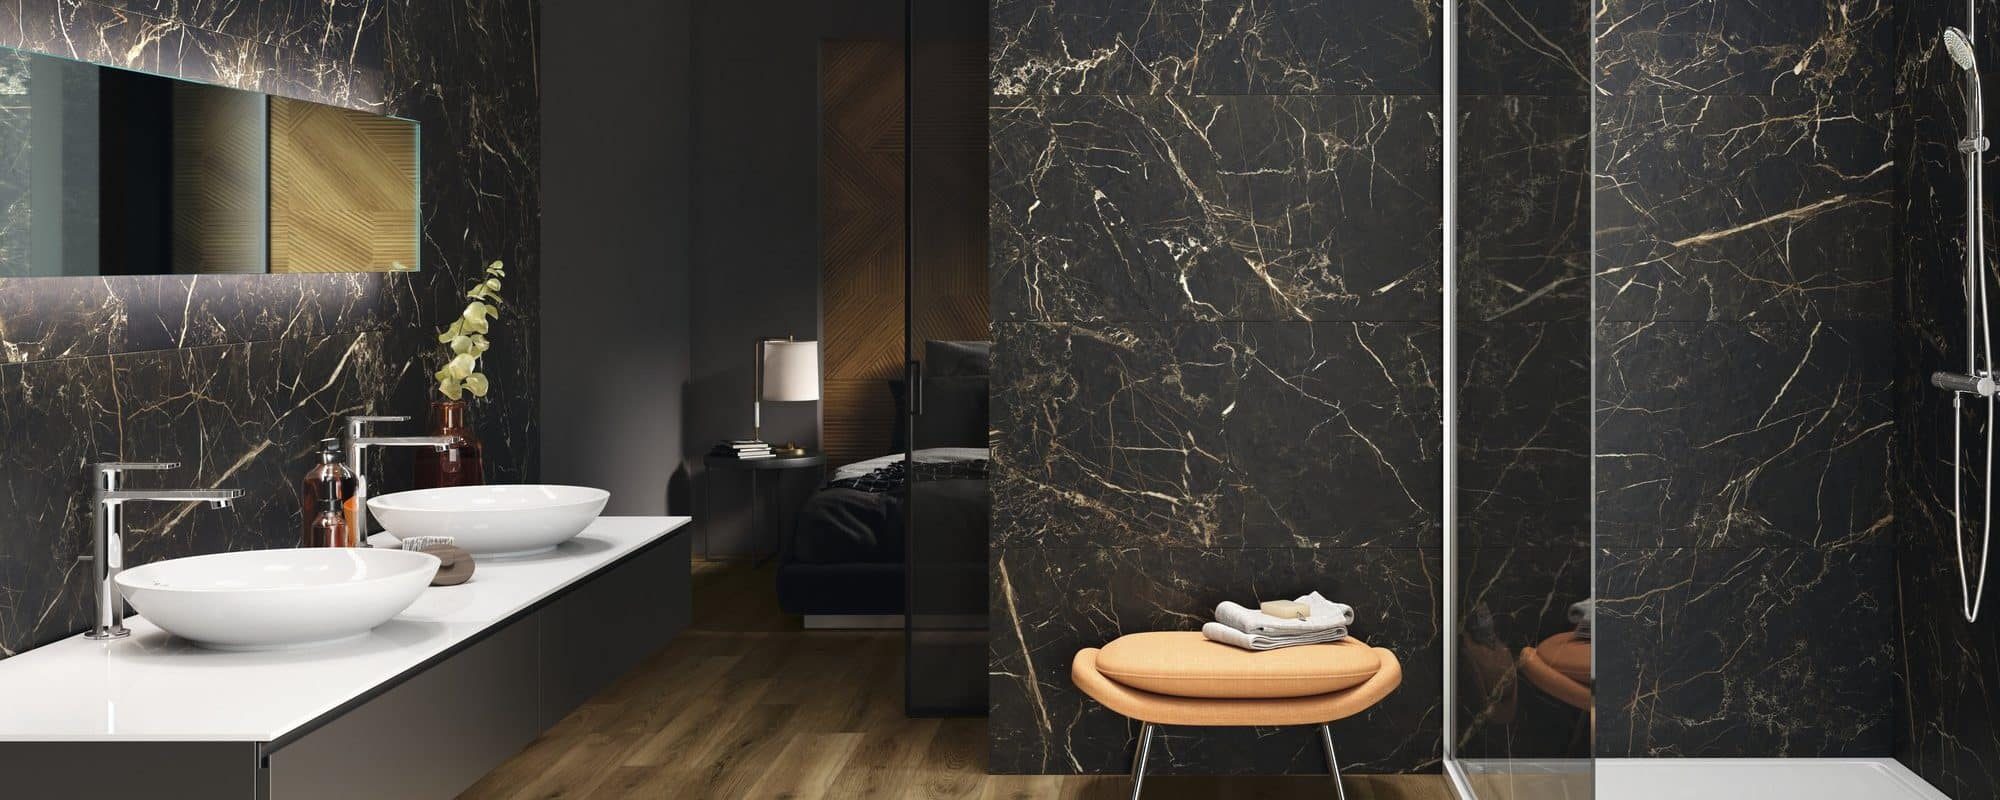 nightlux-marble effect bathroom tiles uk slider 1